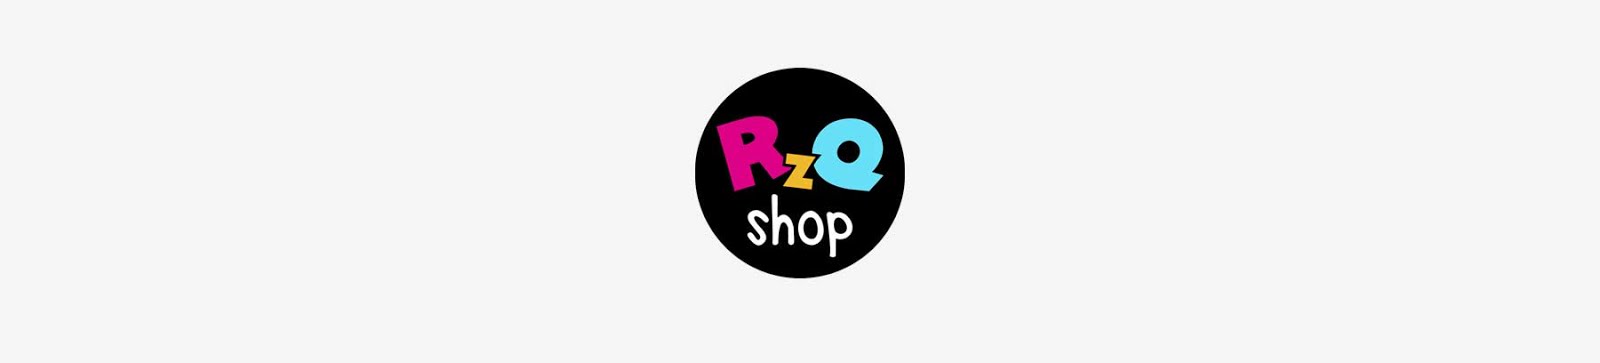 toko online RizQ-shop 